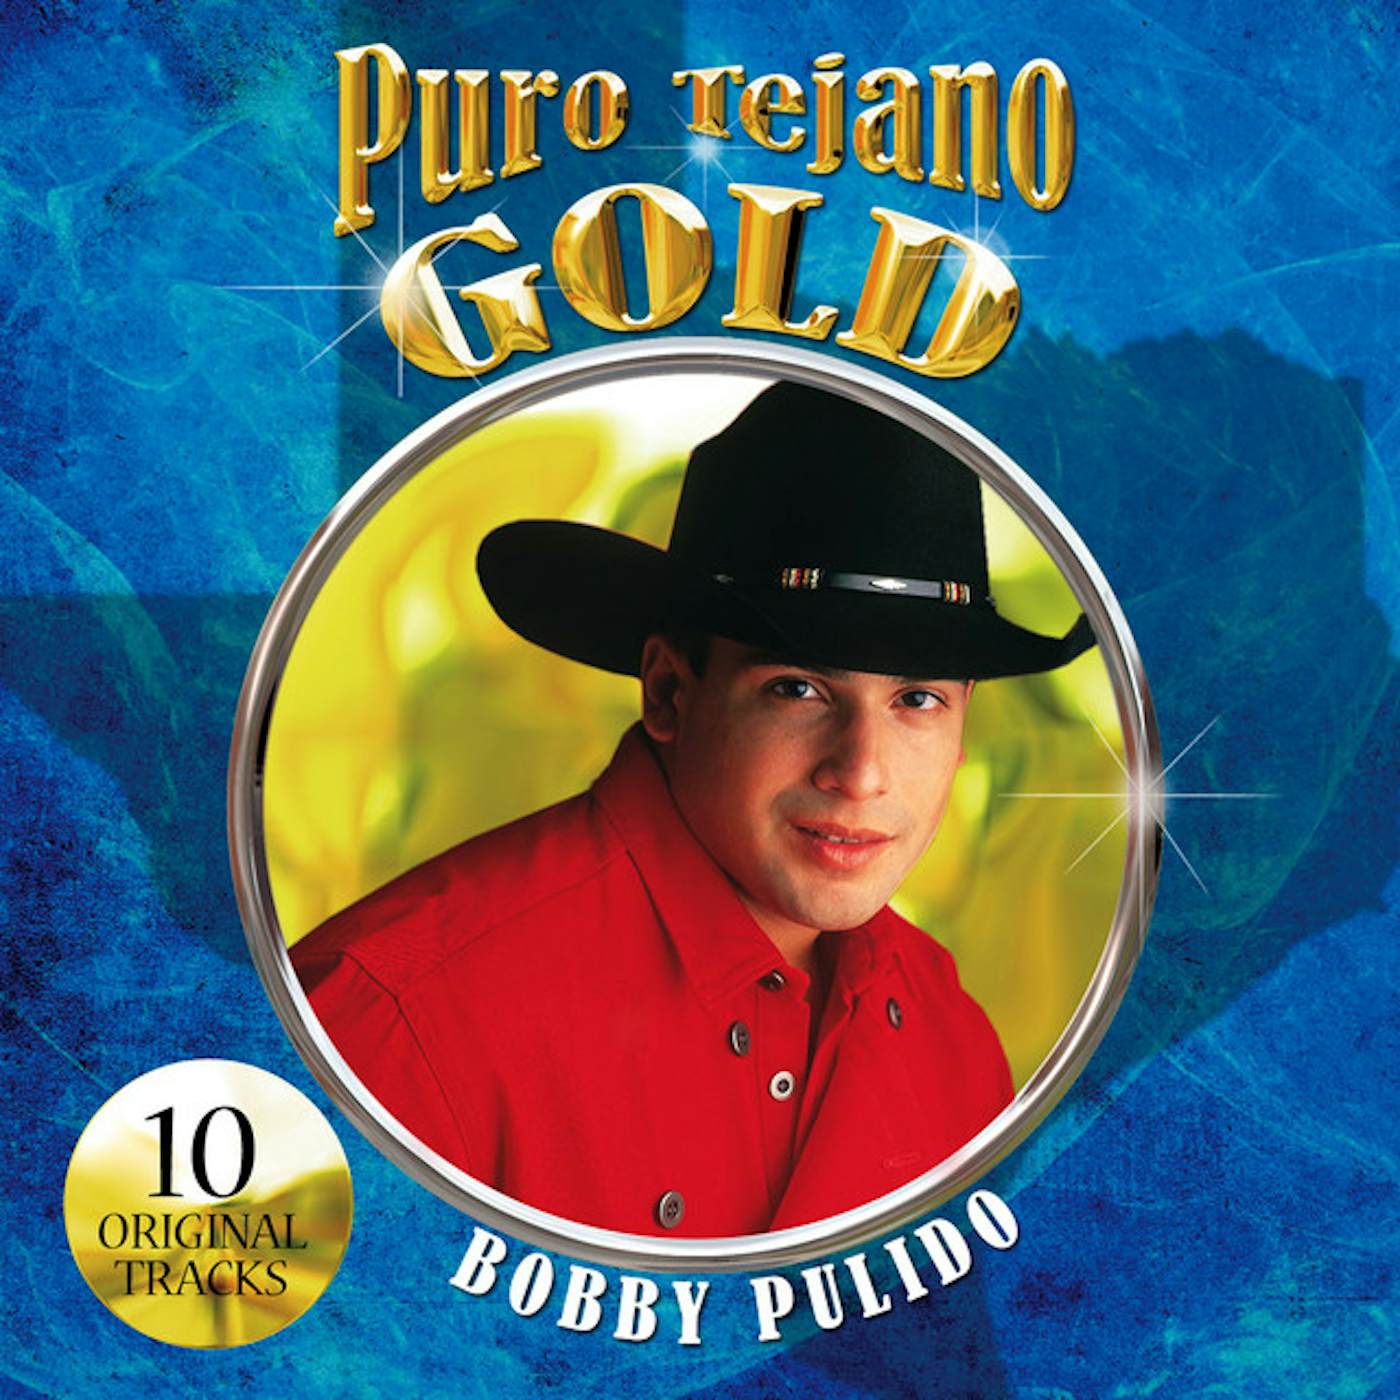 Bobby Pulido PURO TEJANO GOLD CD